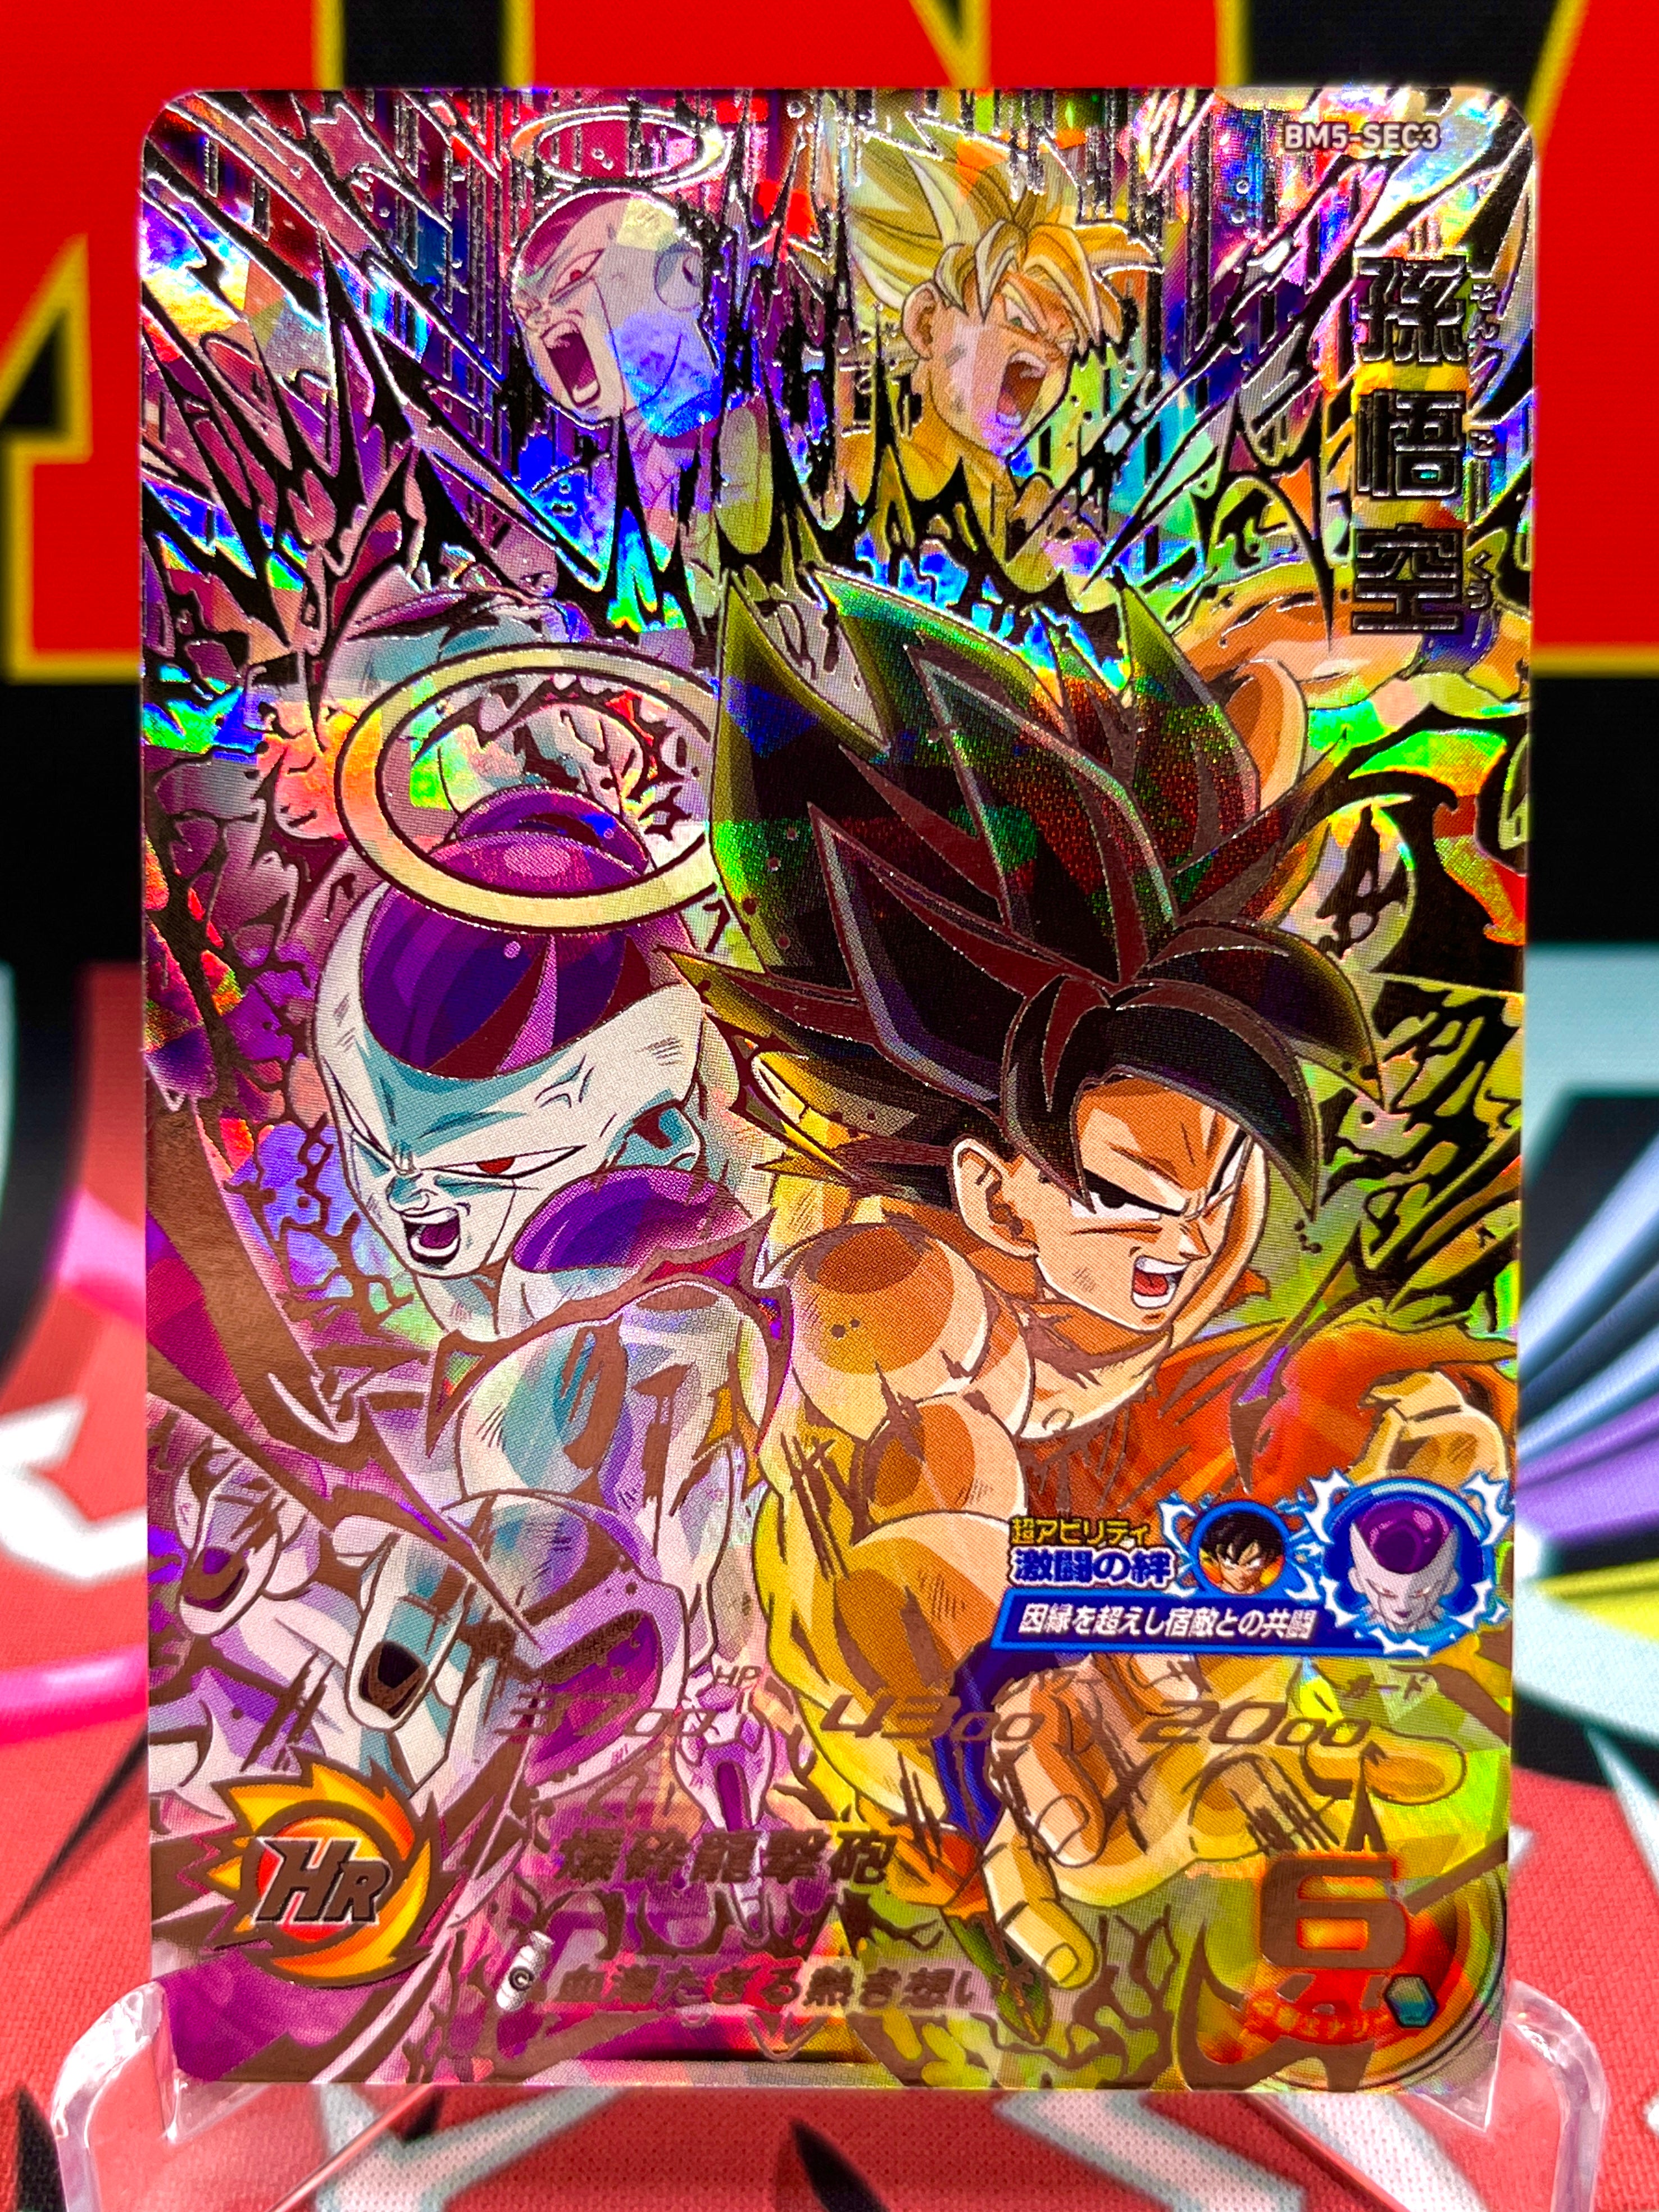 BM5-SEC3 Son Goku & Frieza (2020)